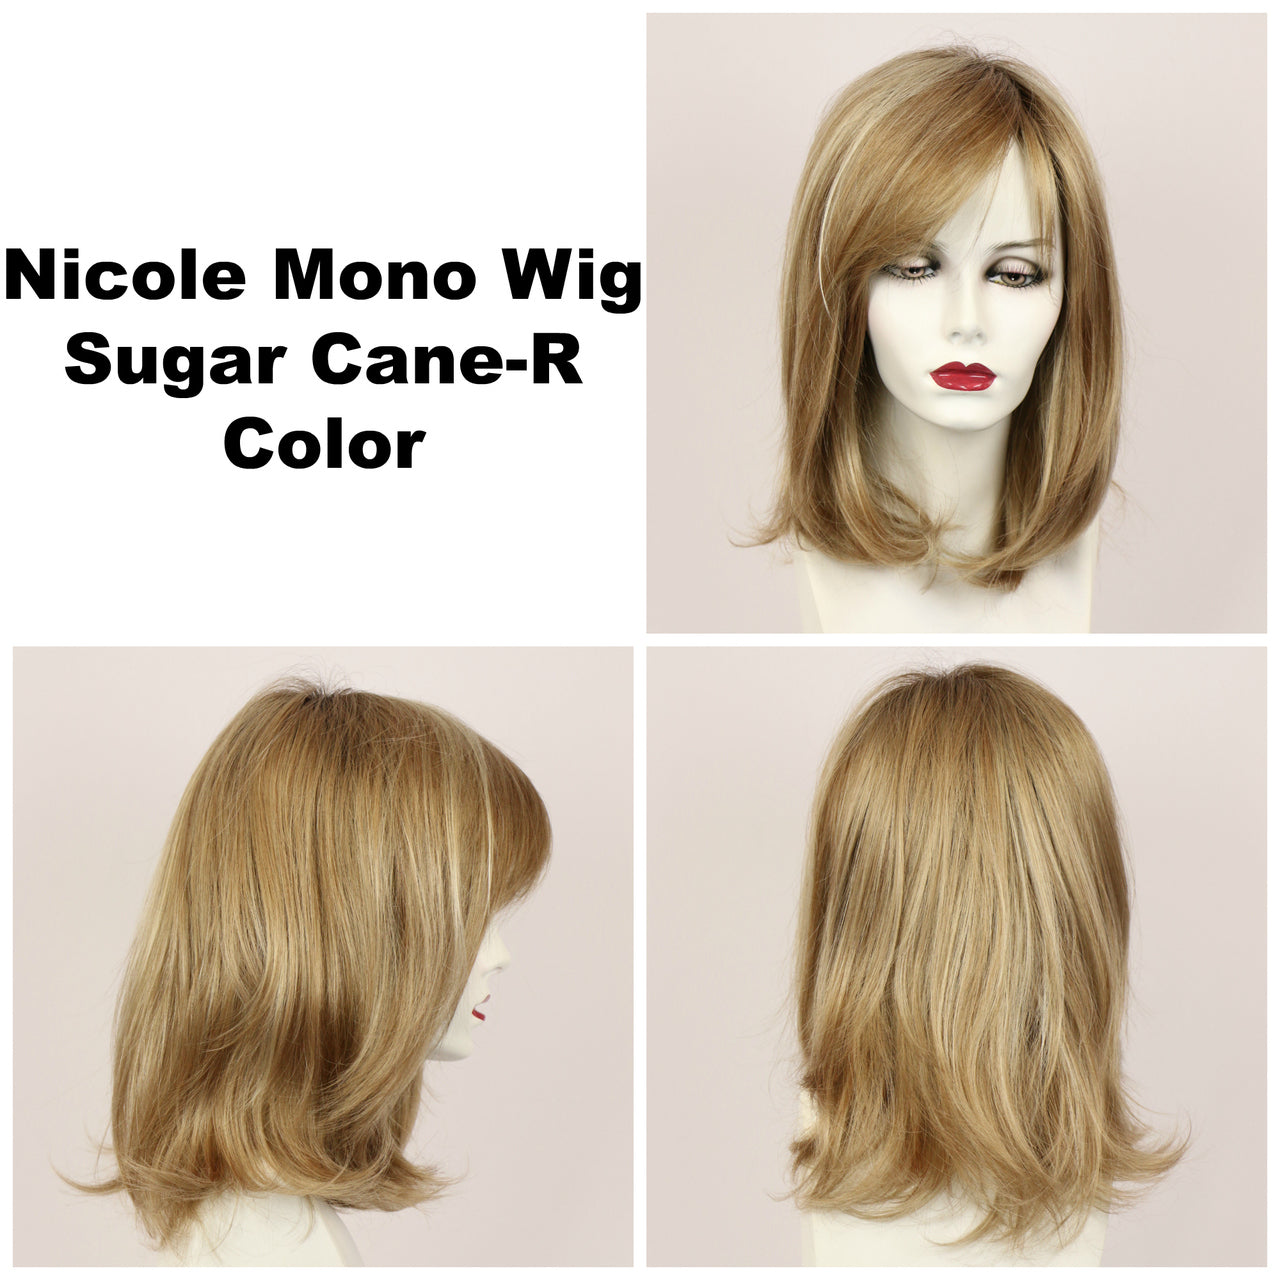 Sugar Cane-R / Nicole Monofilament w/ Roots / Medium Wig